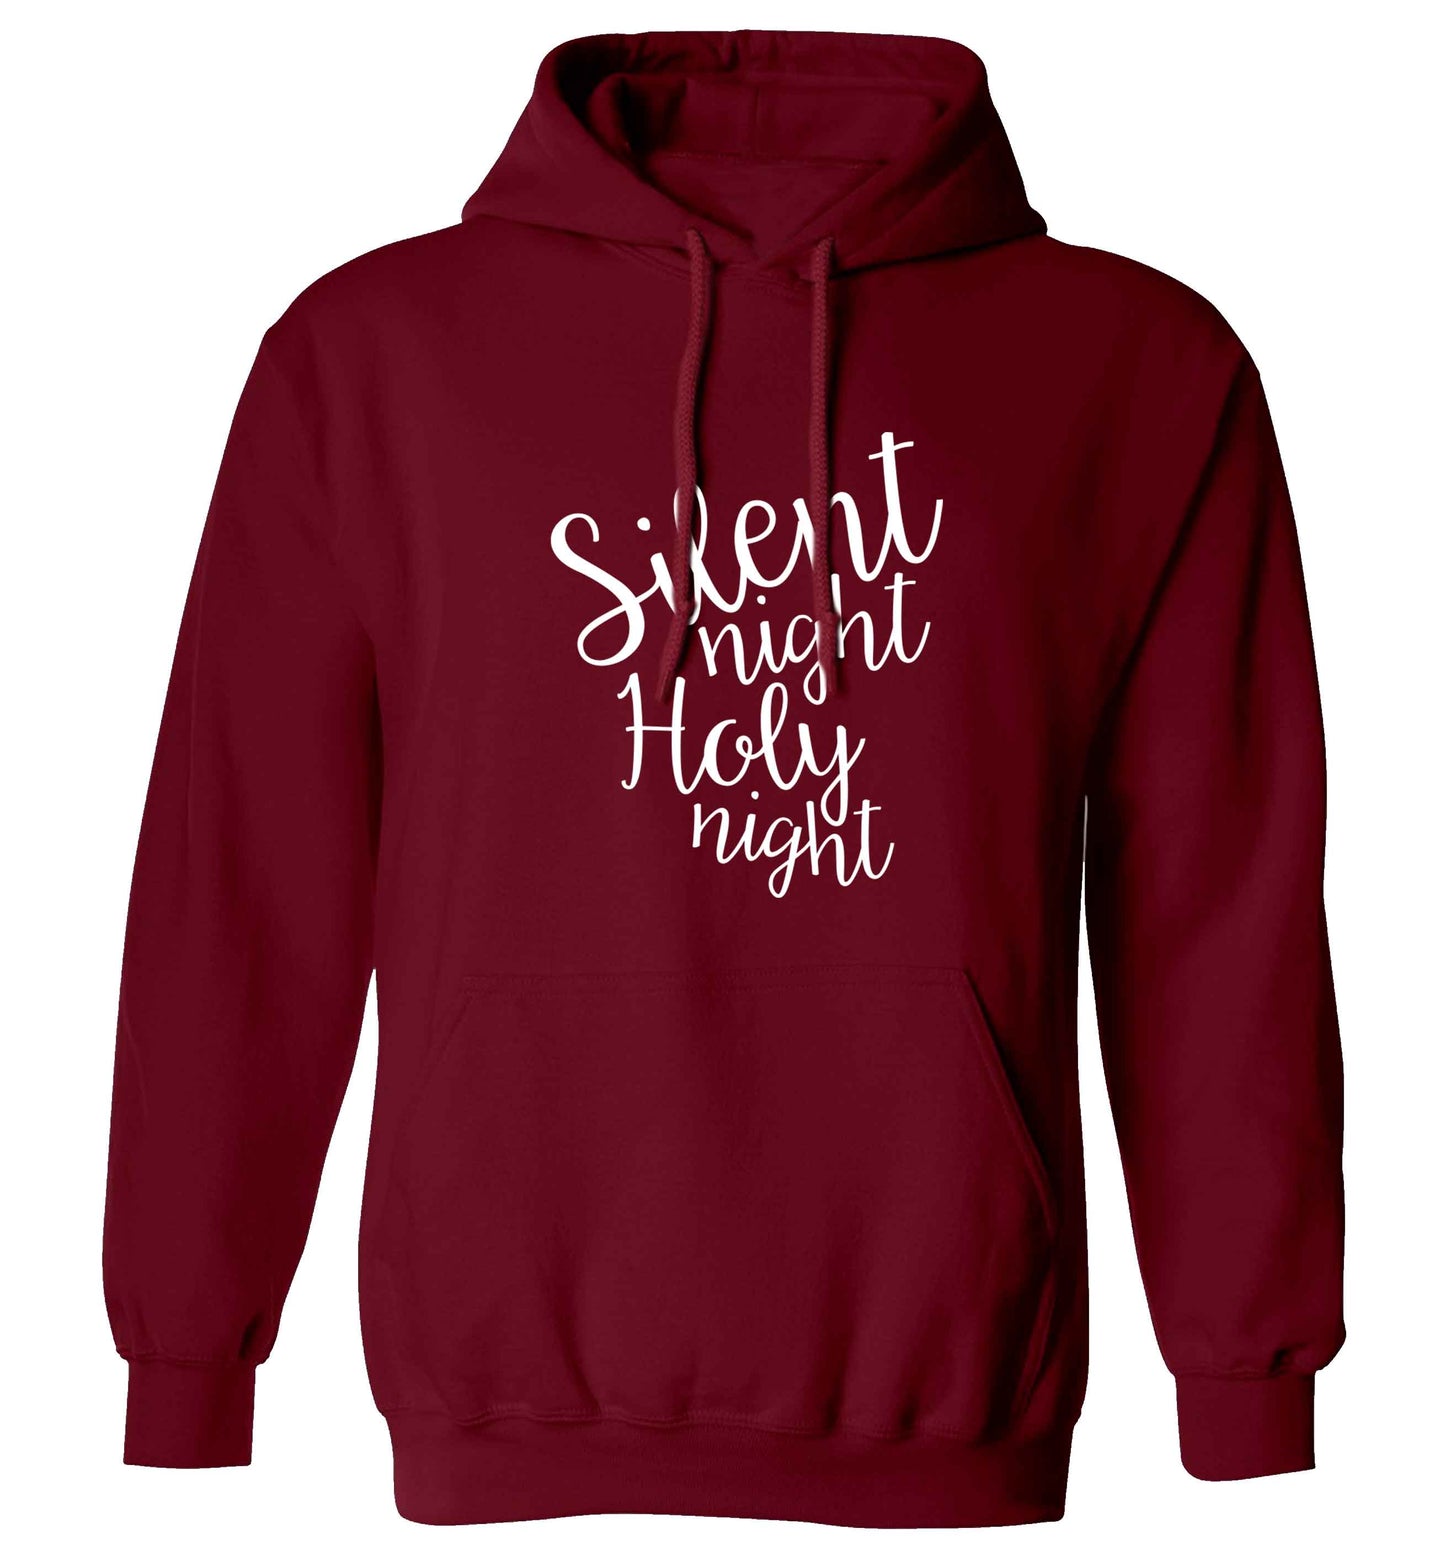 Silent night holy night adults unisex maroon hoodie 2XL